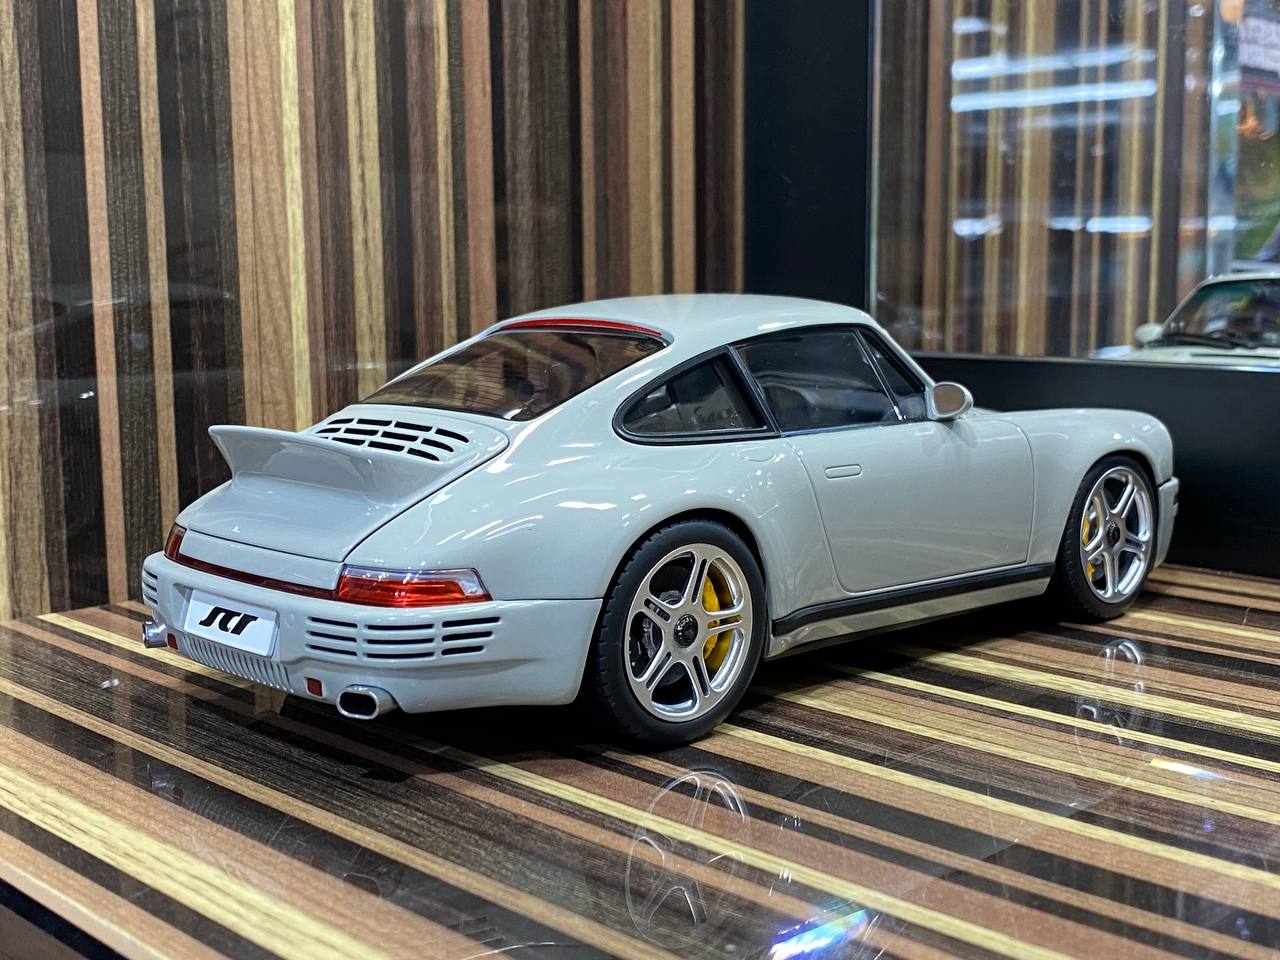 1/18 Diecast  Porsche RUF SCR Chalk Grey Almost Real Scale Model Car